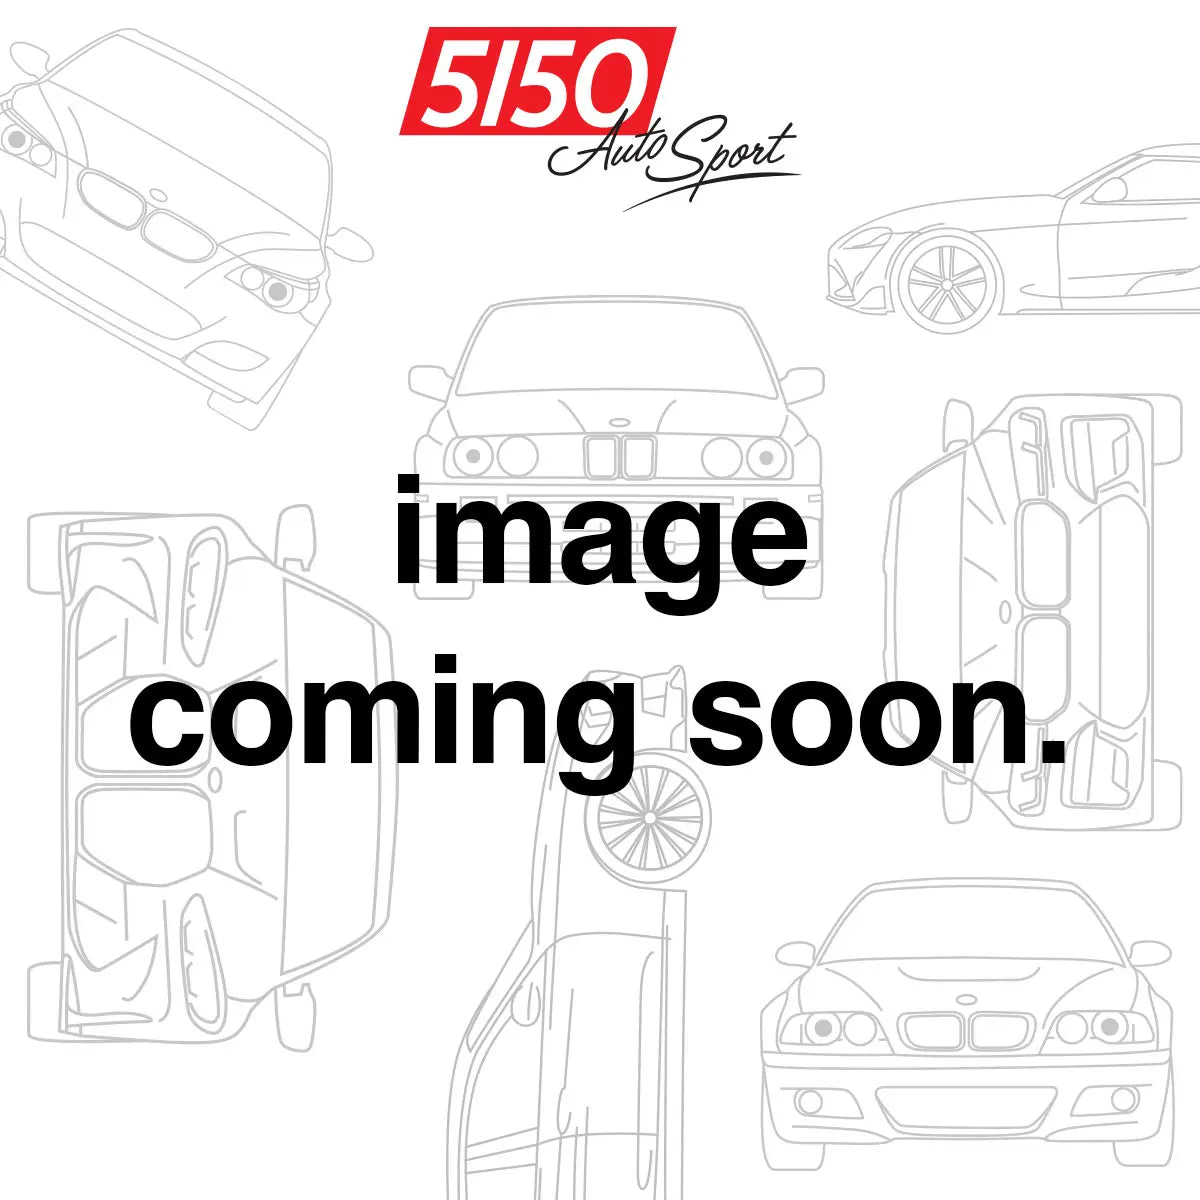 5150 AutoSport Cylinder Head O-Ringing Service, 8-Cylinder BMW Engines